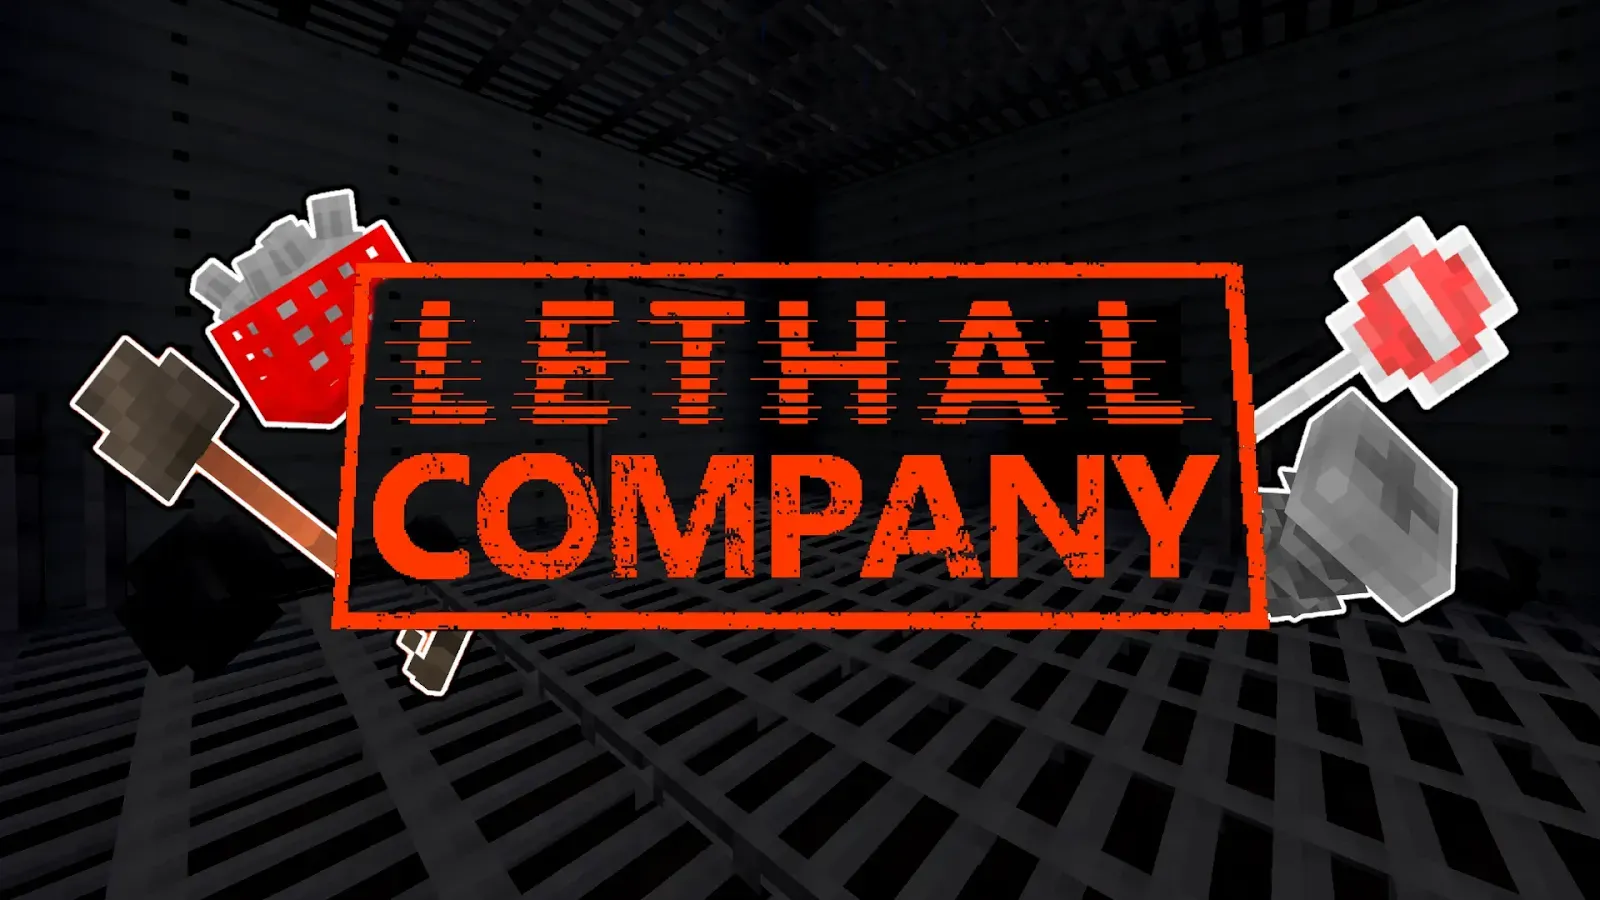 Lethal Company Mod